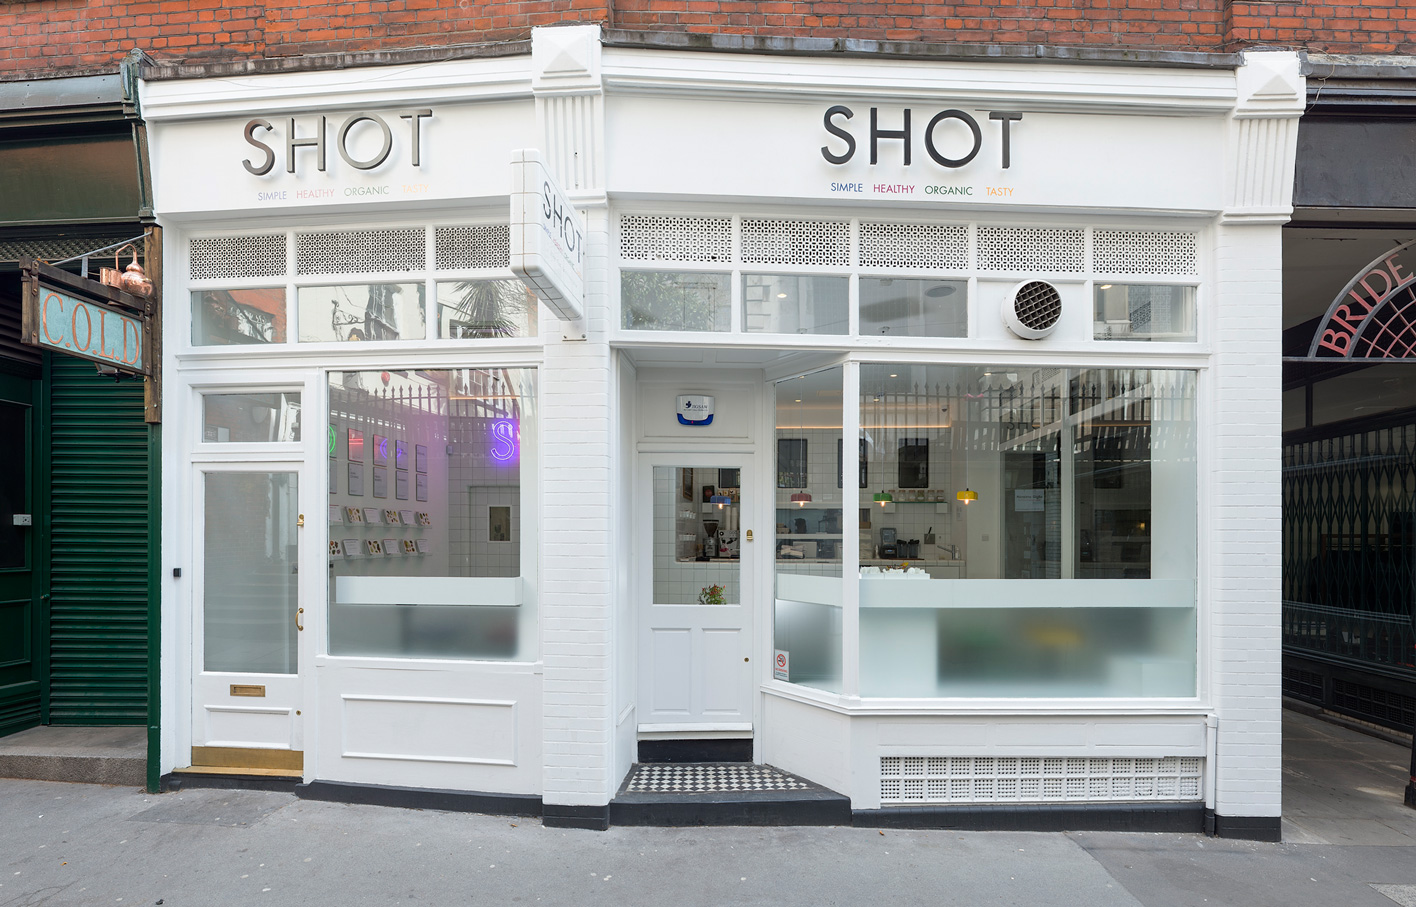 Aldworth James & Bond | SHOT exterior for healthy food concept and juice bar